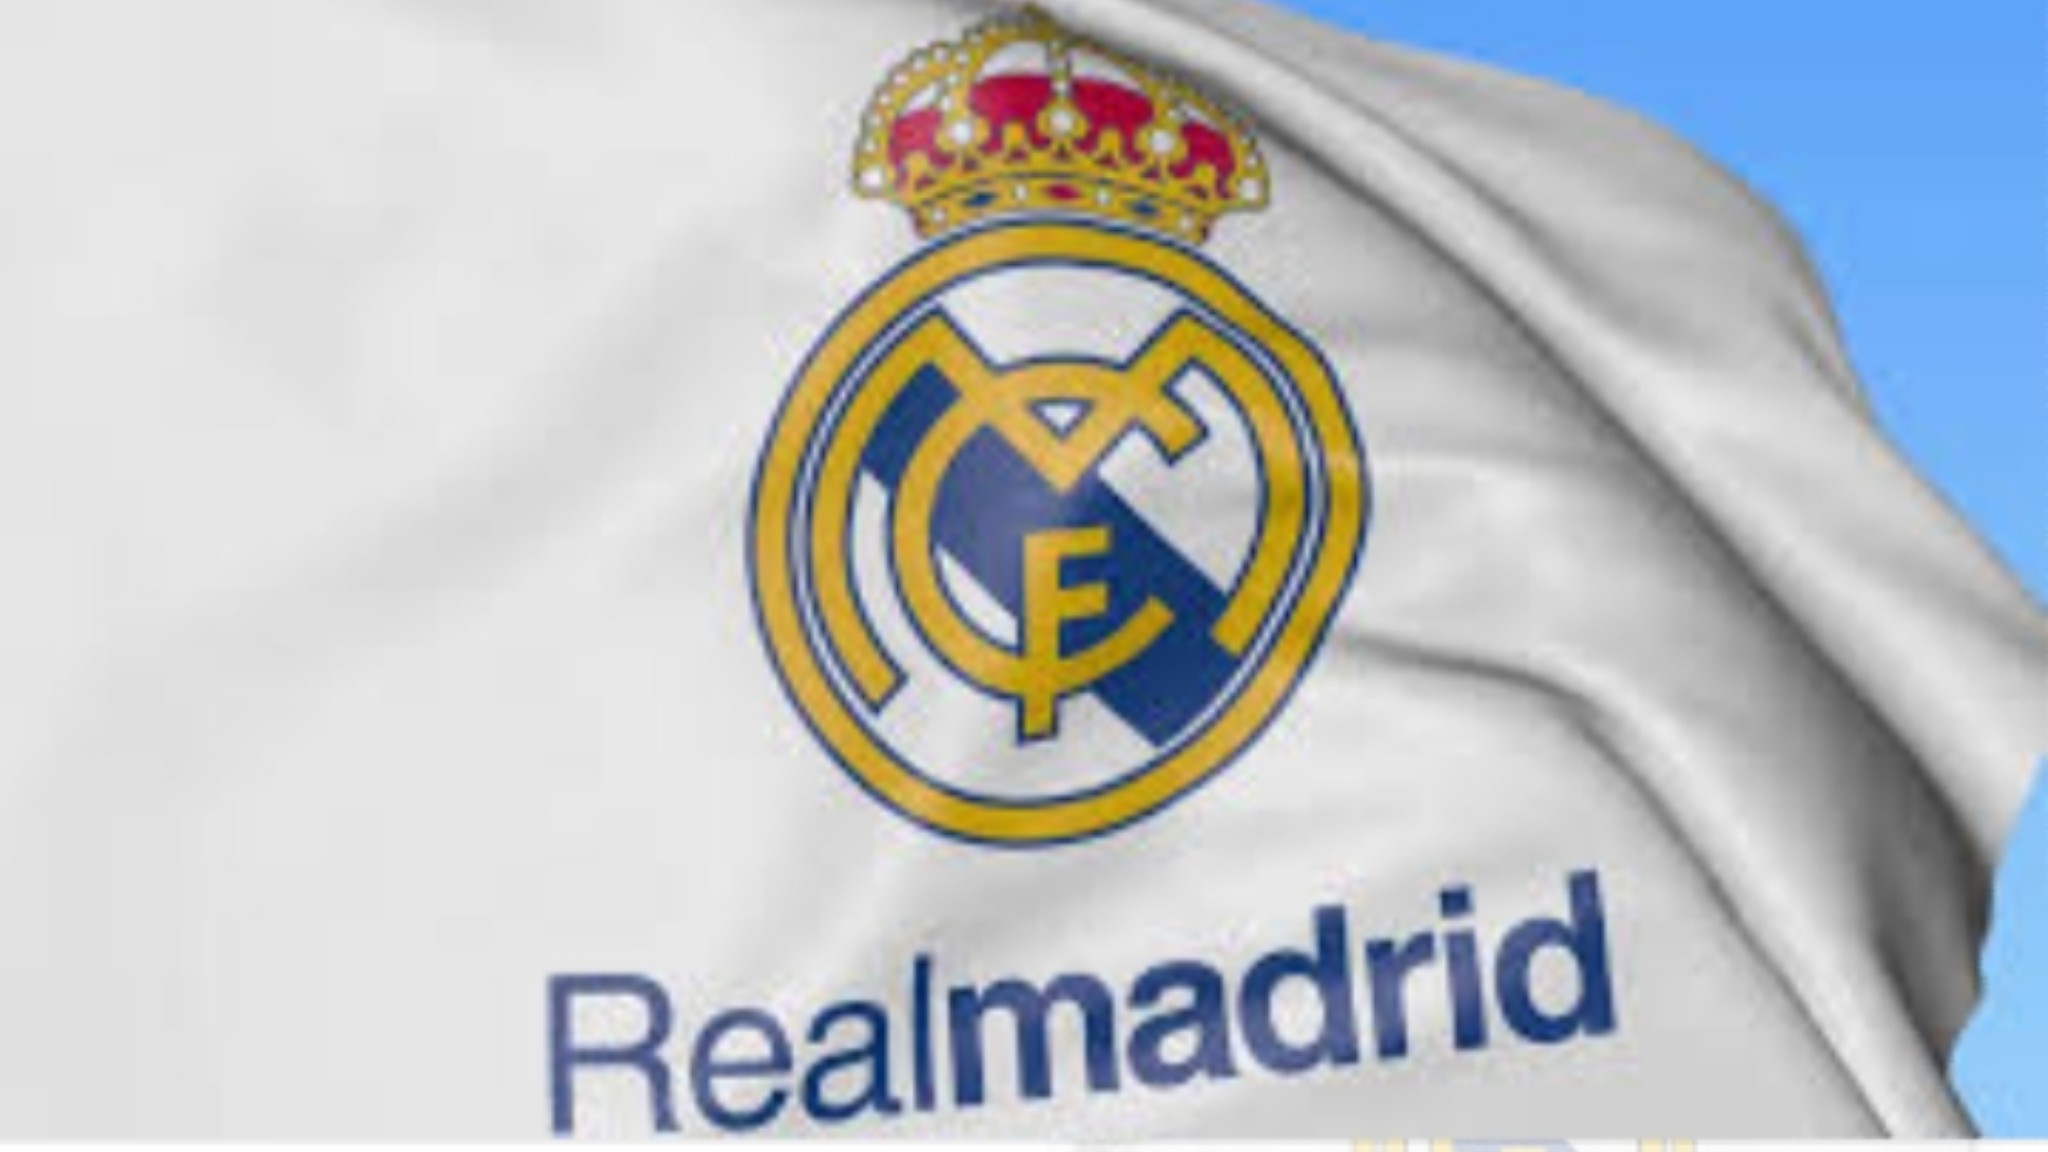 Реал Мадрид обои на рабочий стол